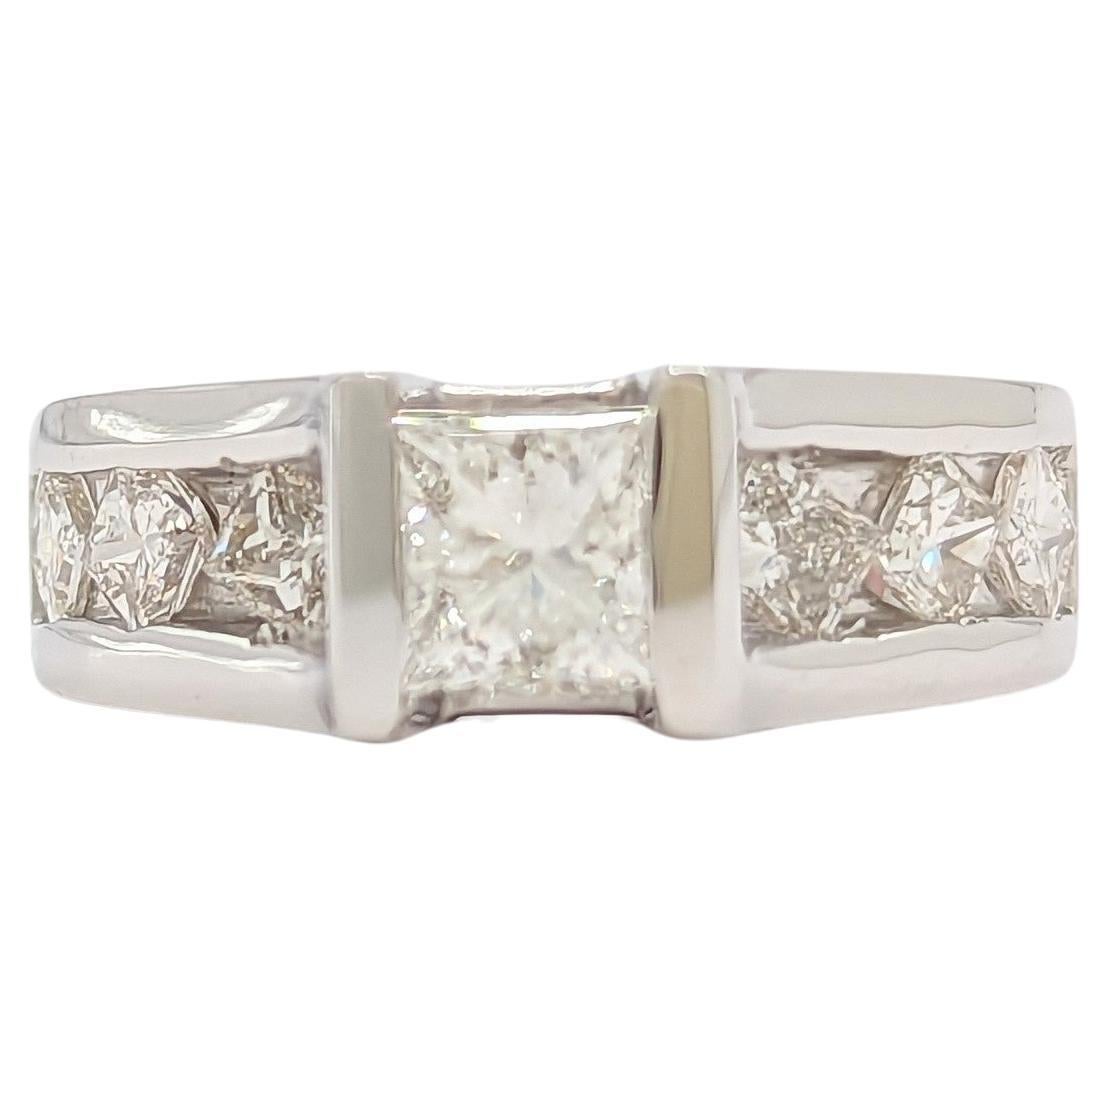 White Diamond Princess Cut Ring in 14K White Gold